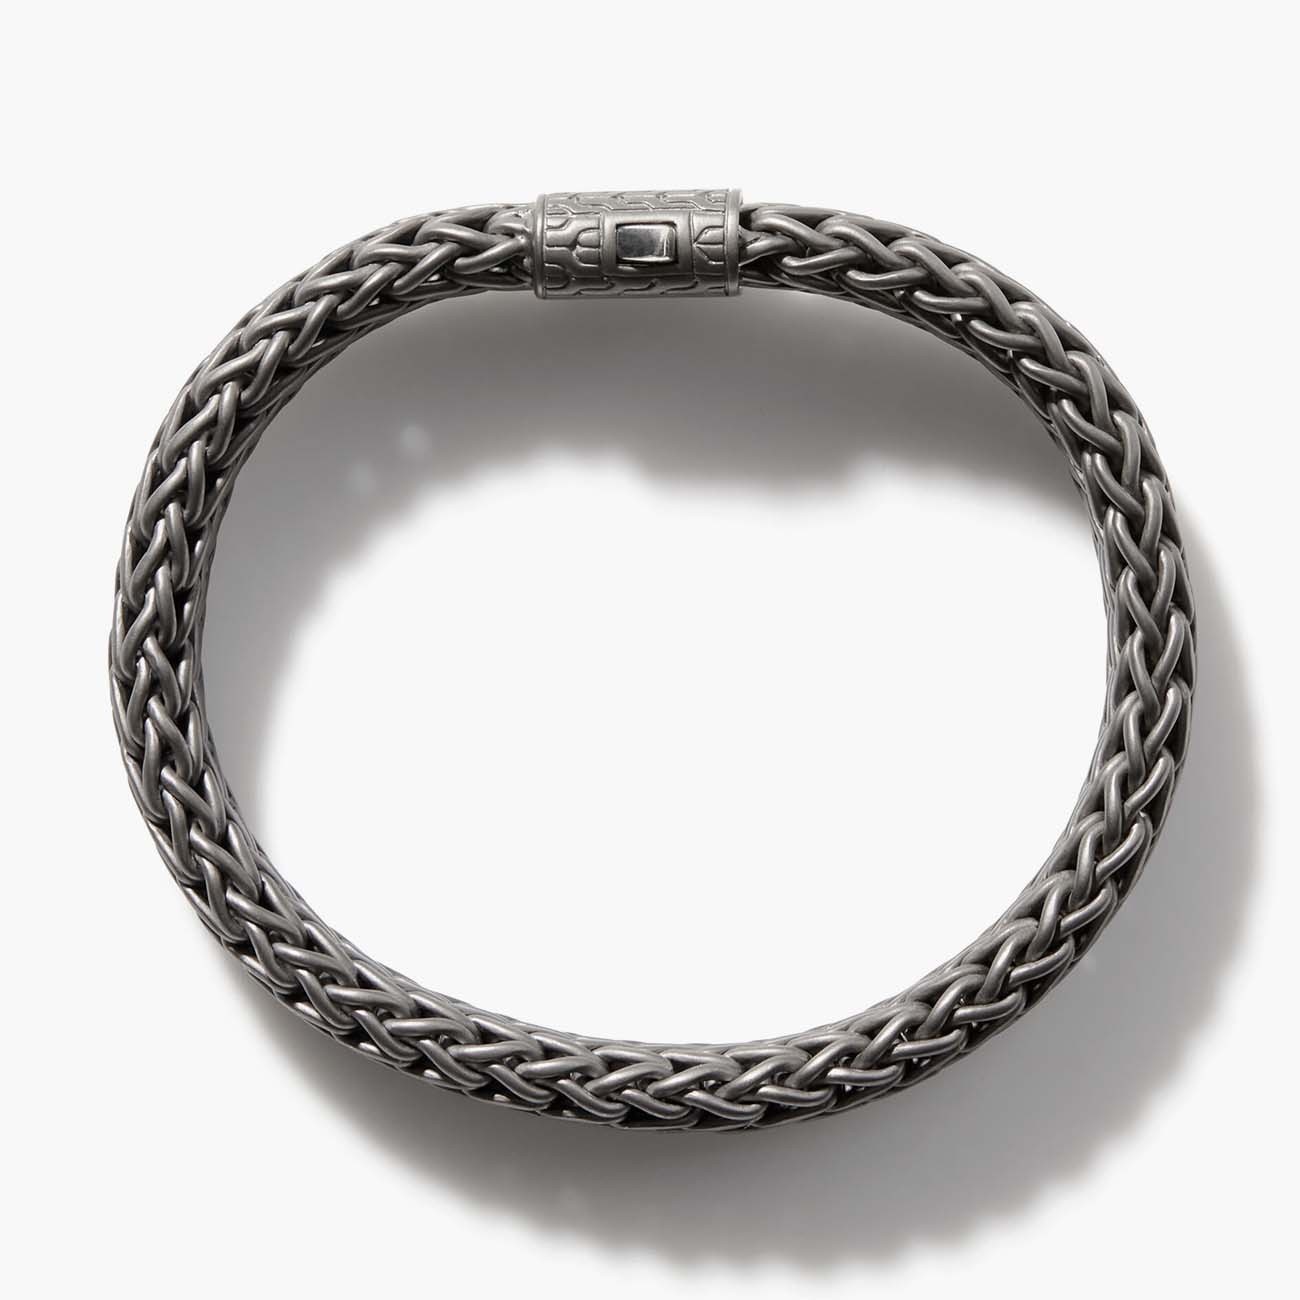 John Hardy Classic Chain bracelet - Silver